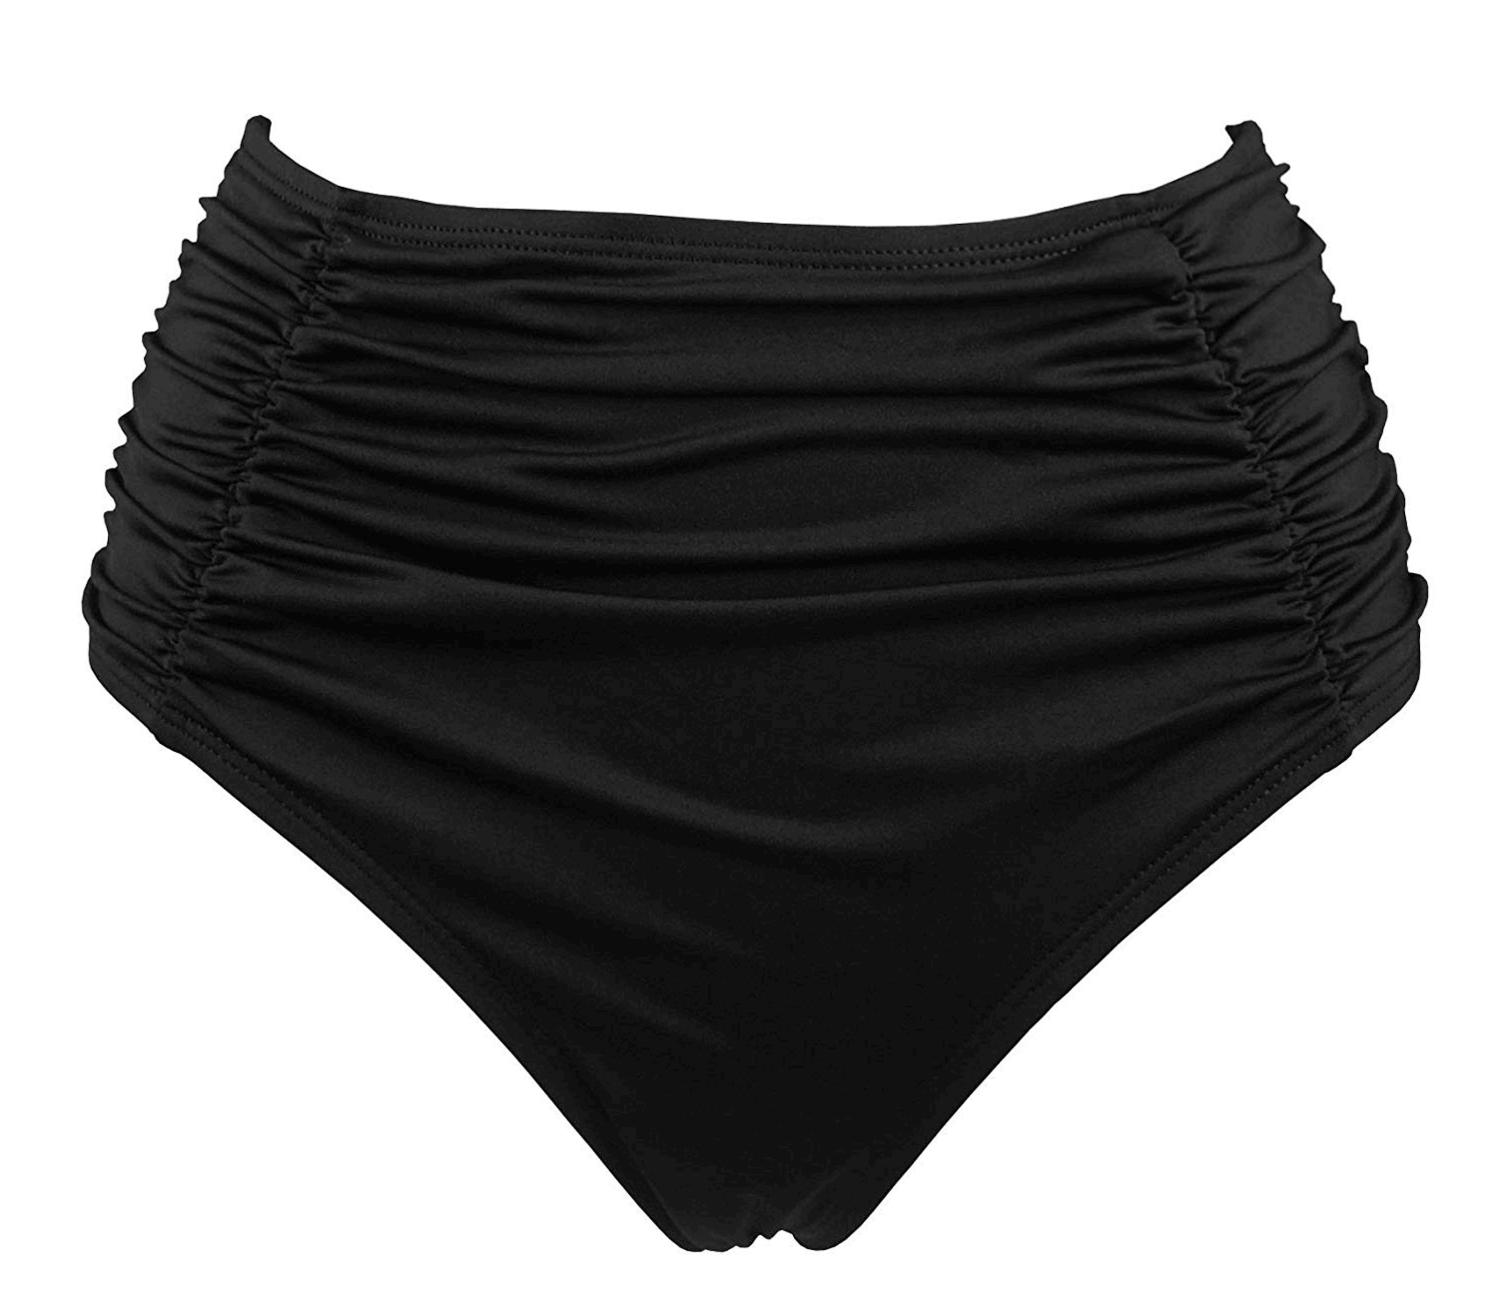 Cocoship Black Womens Retro High Waisted Bikini Bottom Black Size